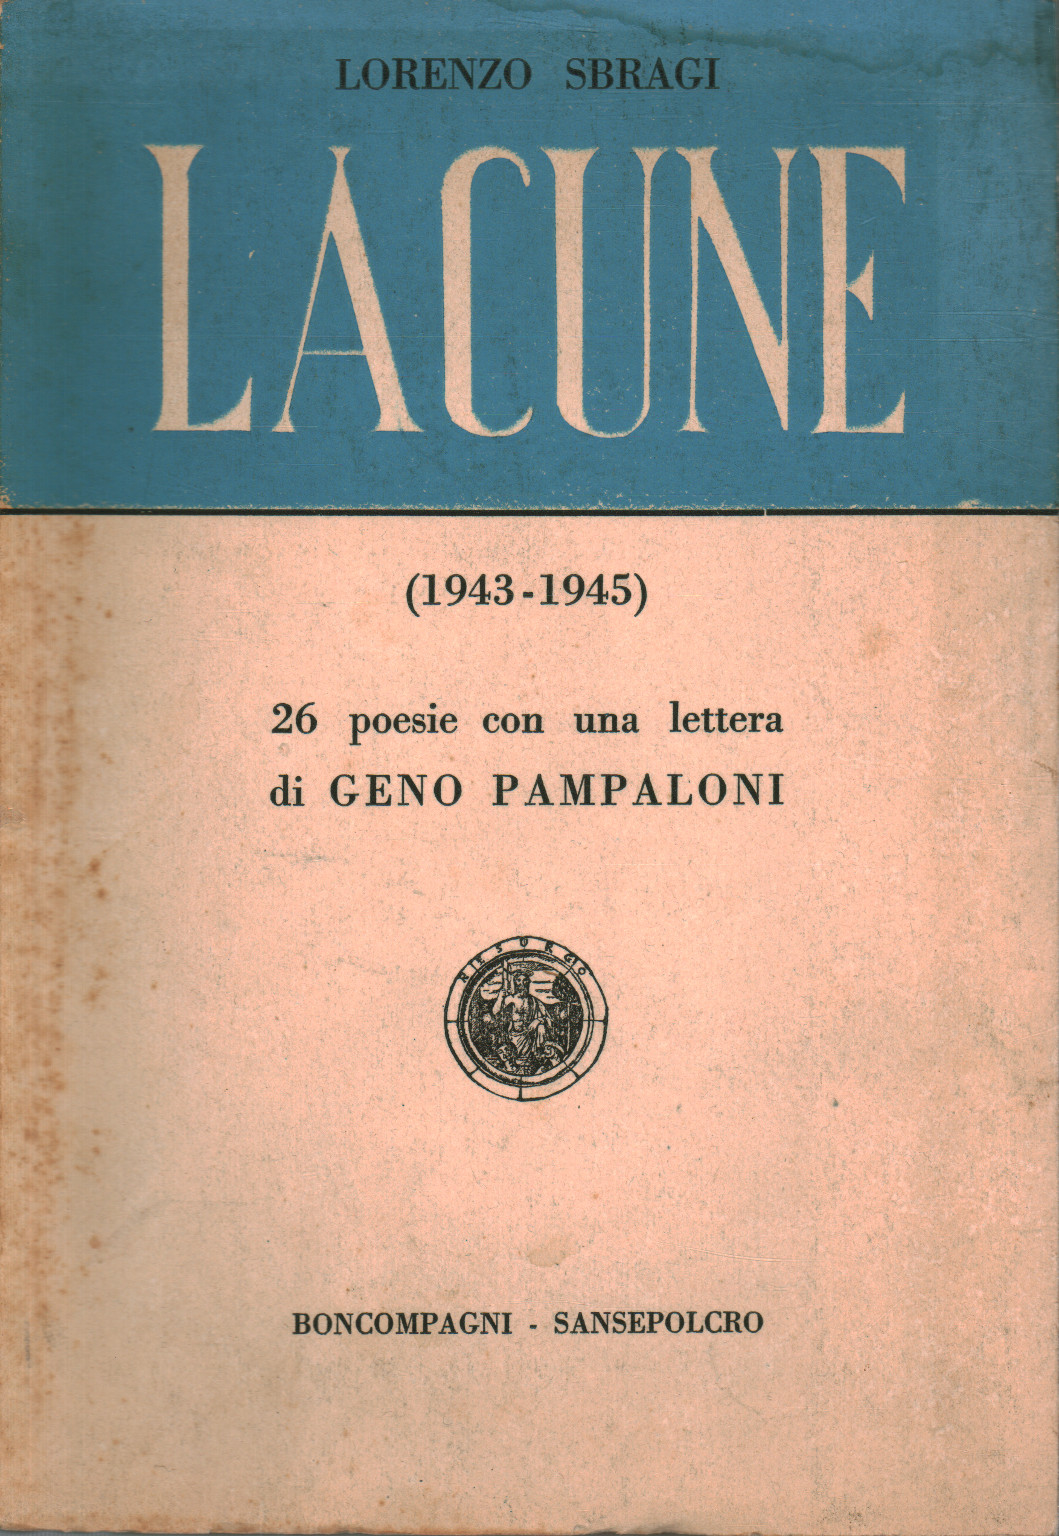 Les Lacunes (1943-1945), Lorenzo Sbragi